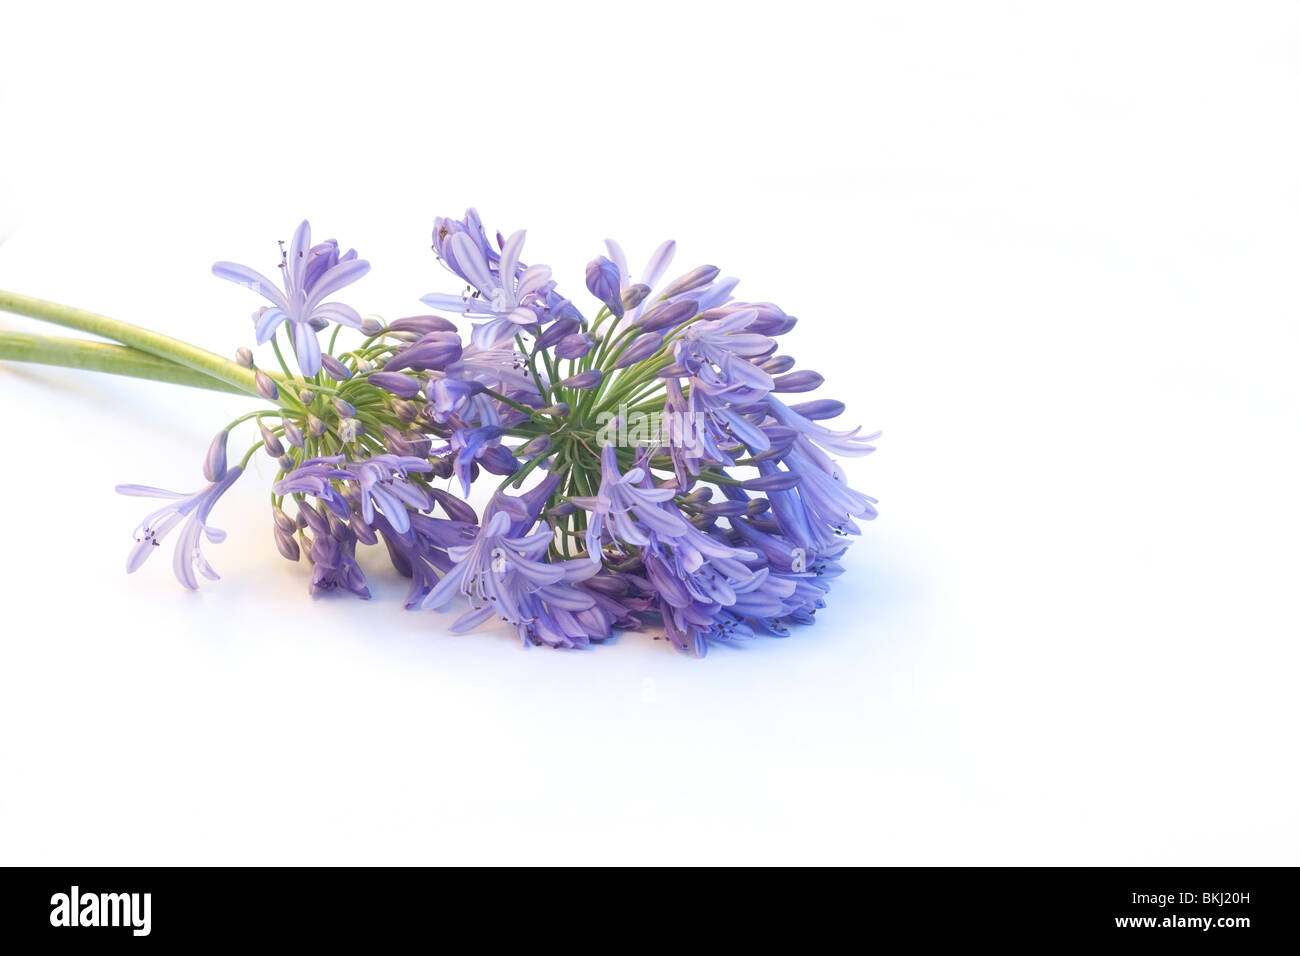 Agapanthus flowers on white background Stock Photo